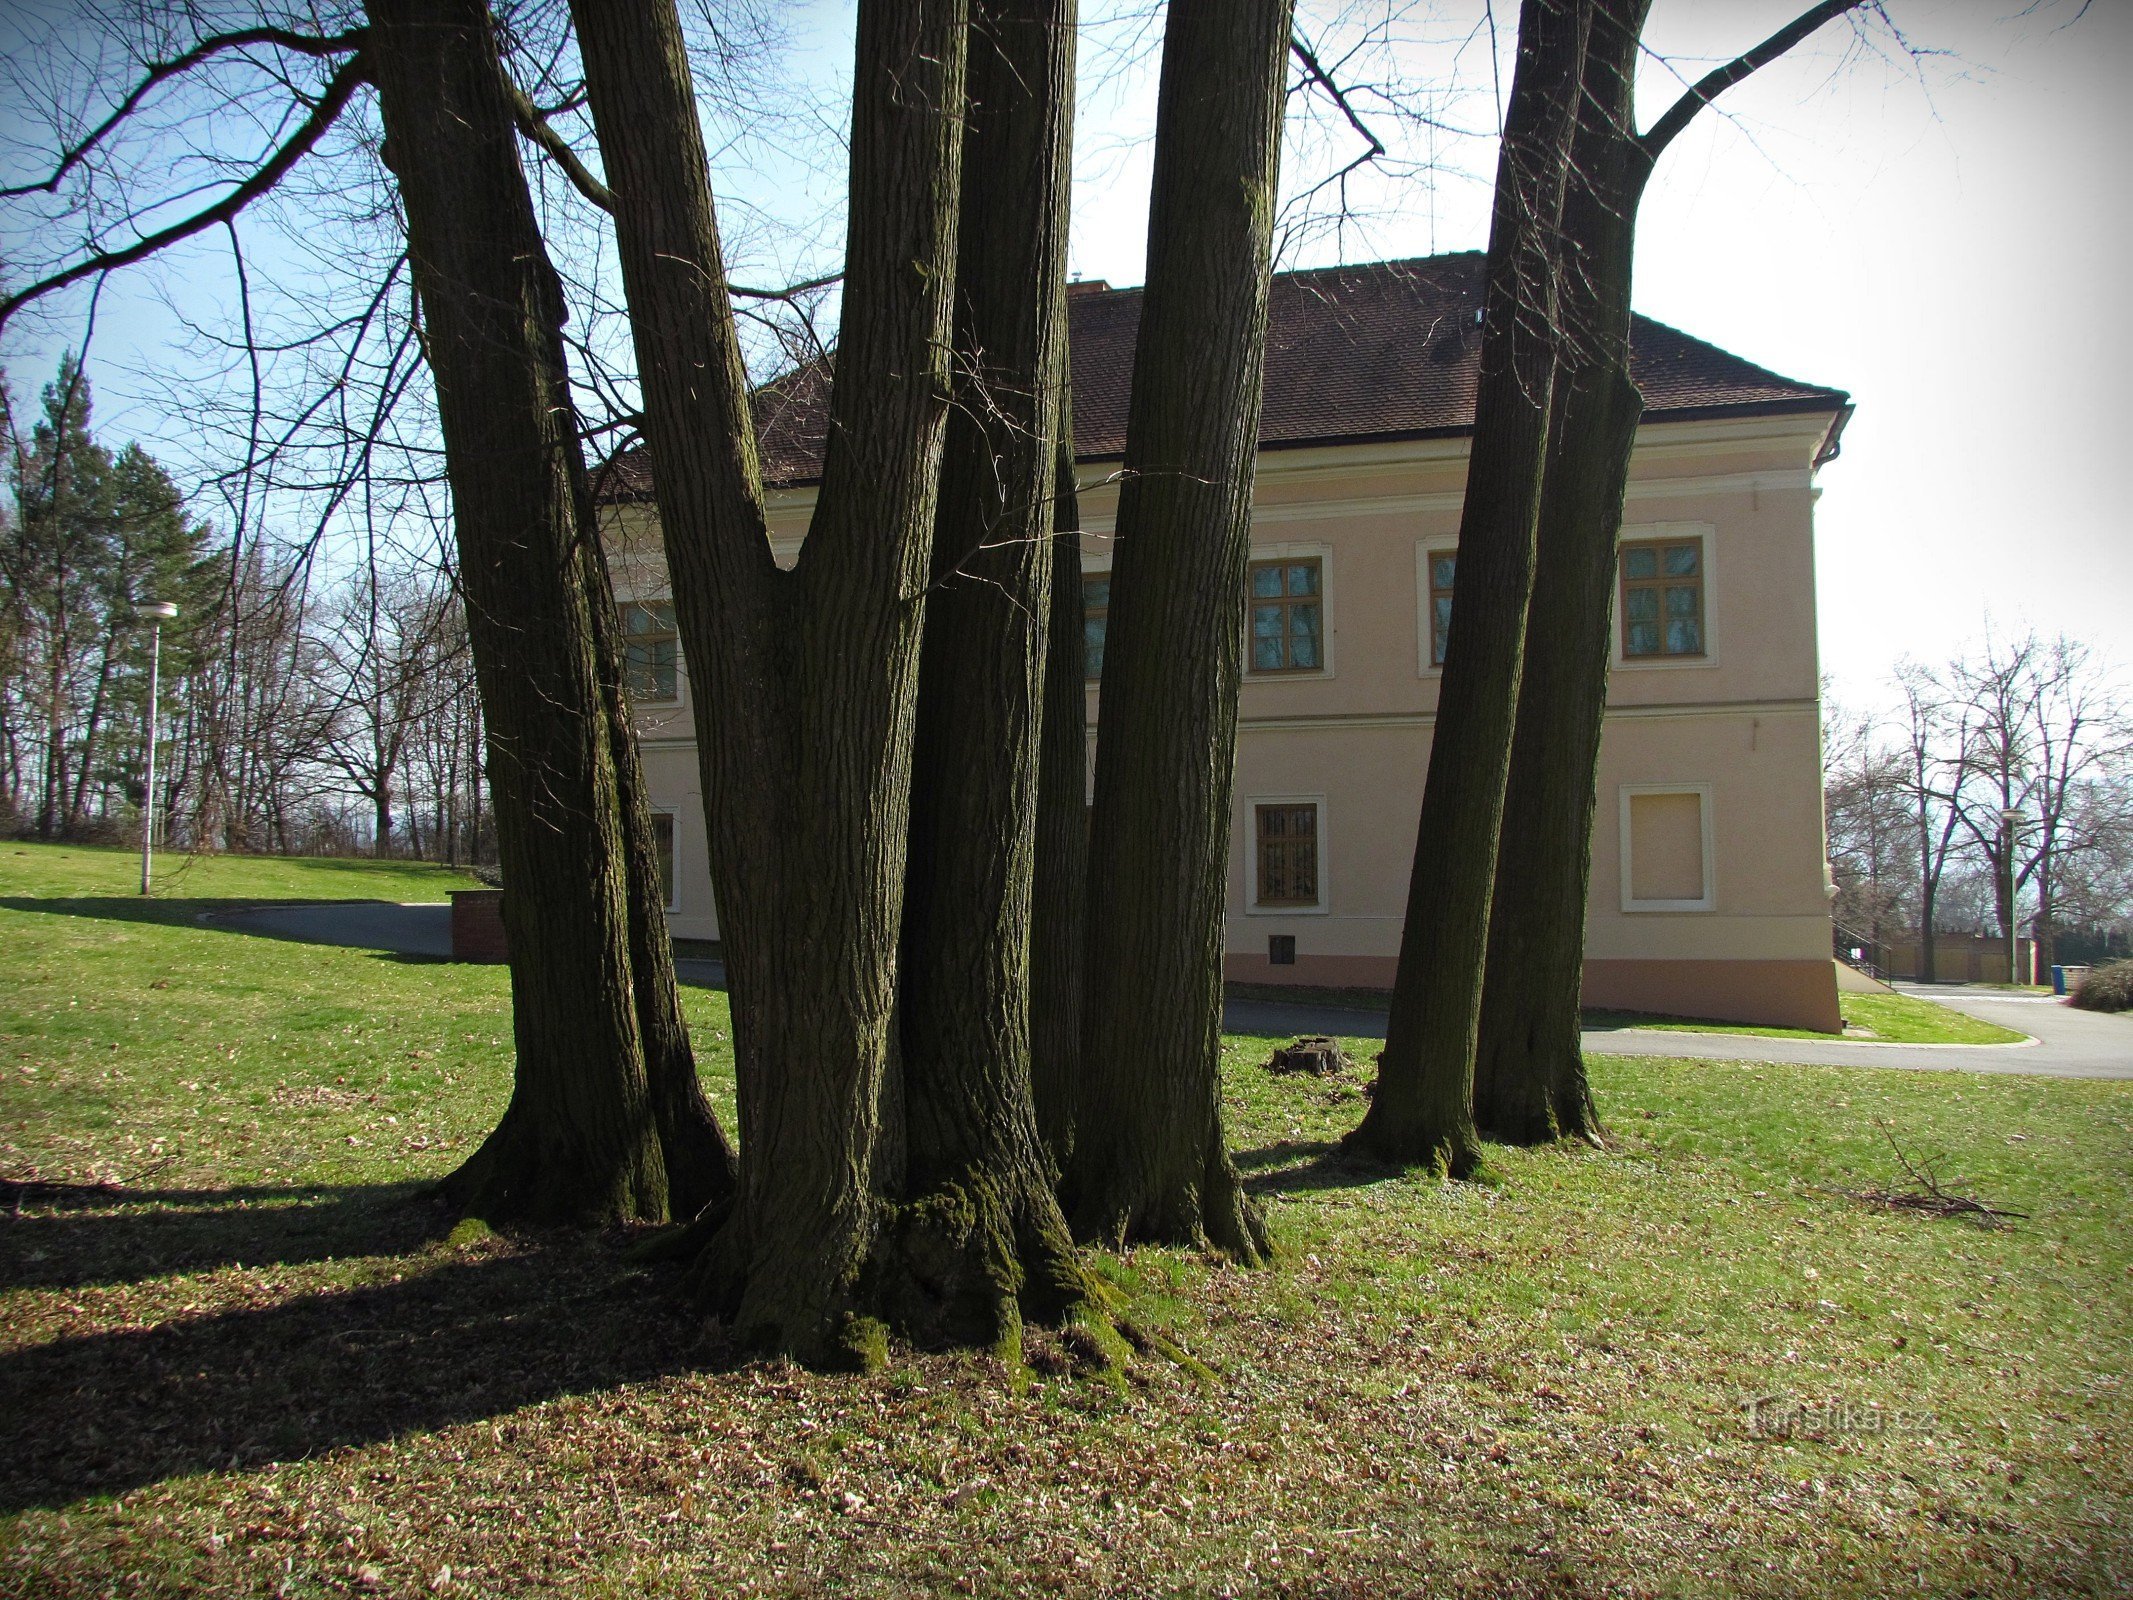 Клечівка - замок і парк